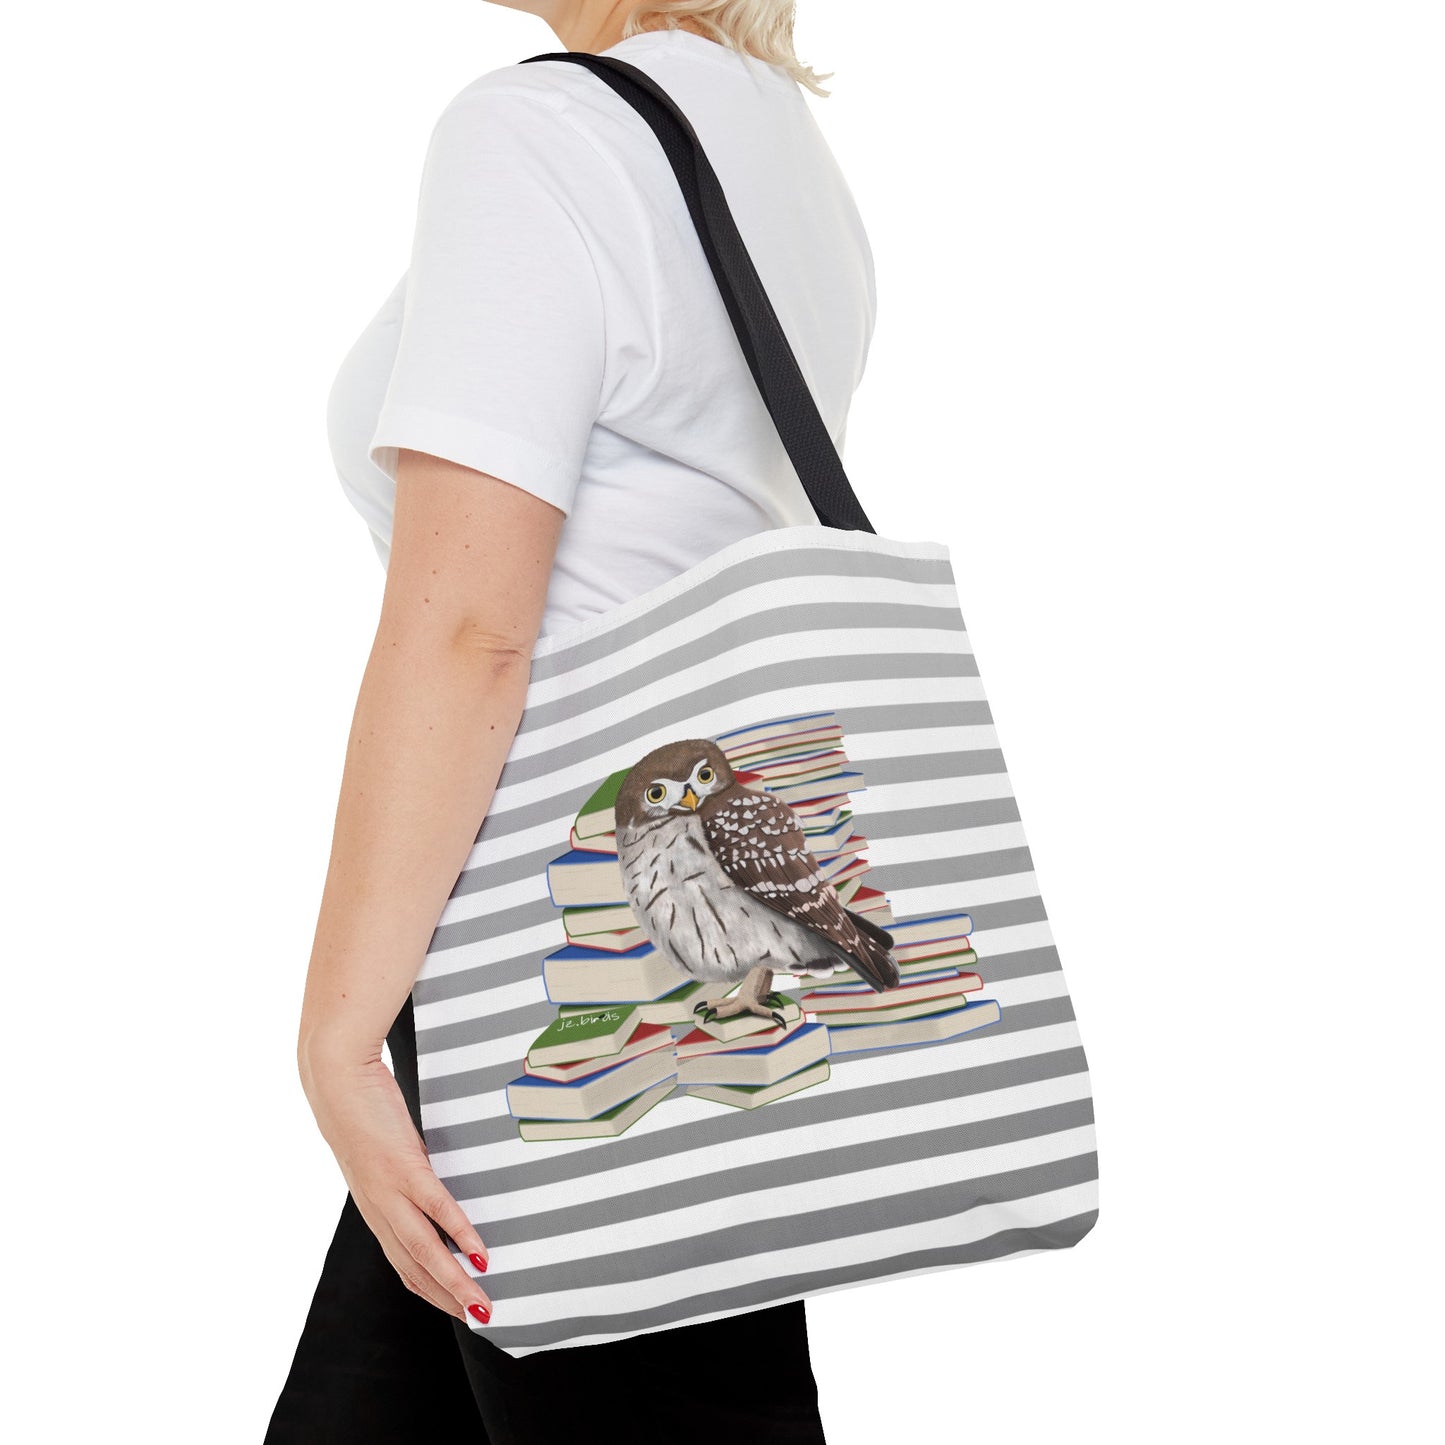 Owl Bird and Books Birdlover Bookworm Tote Bag 16"x16"